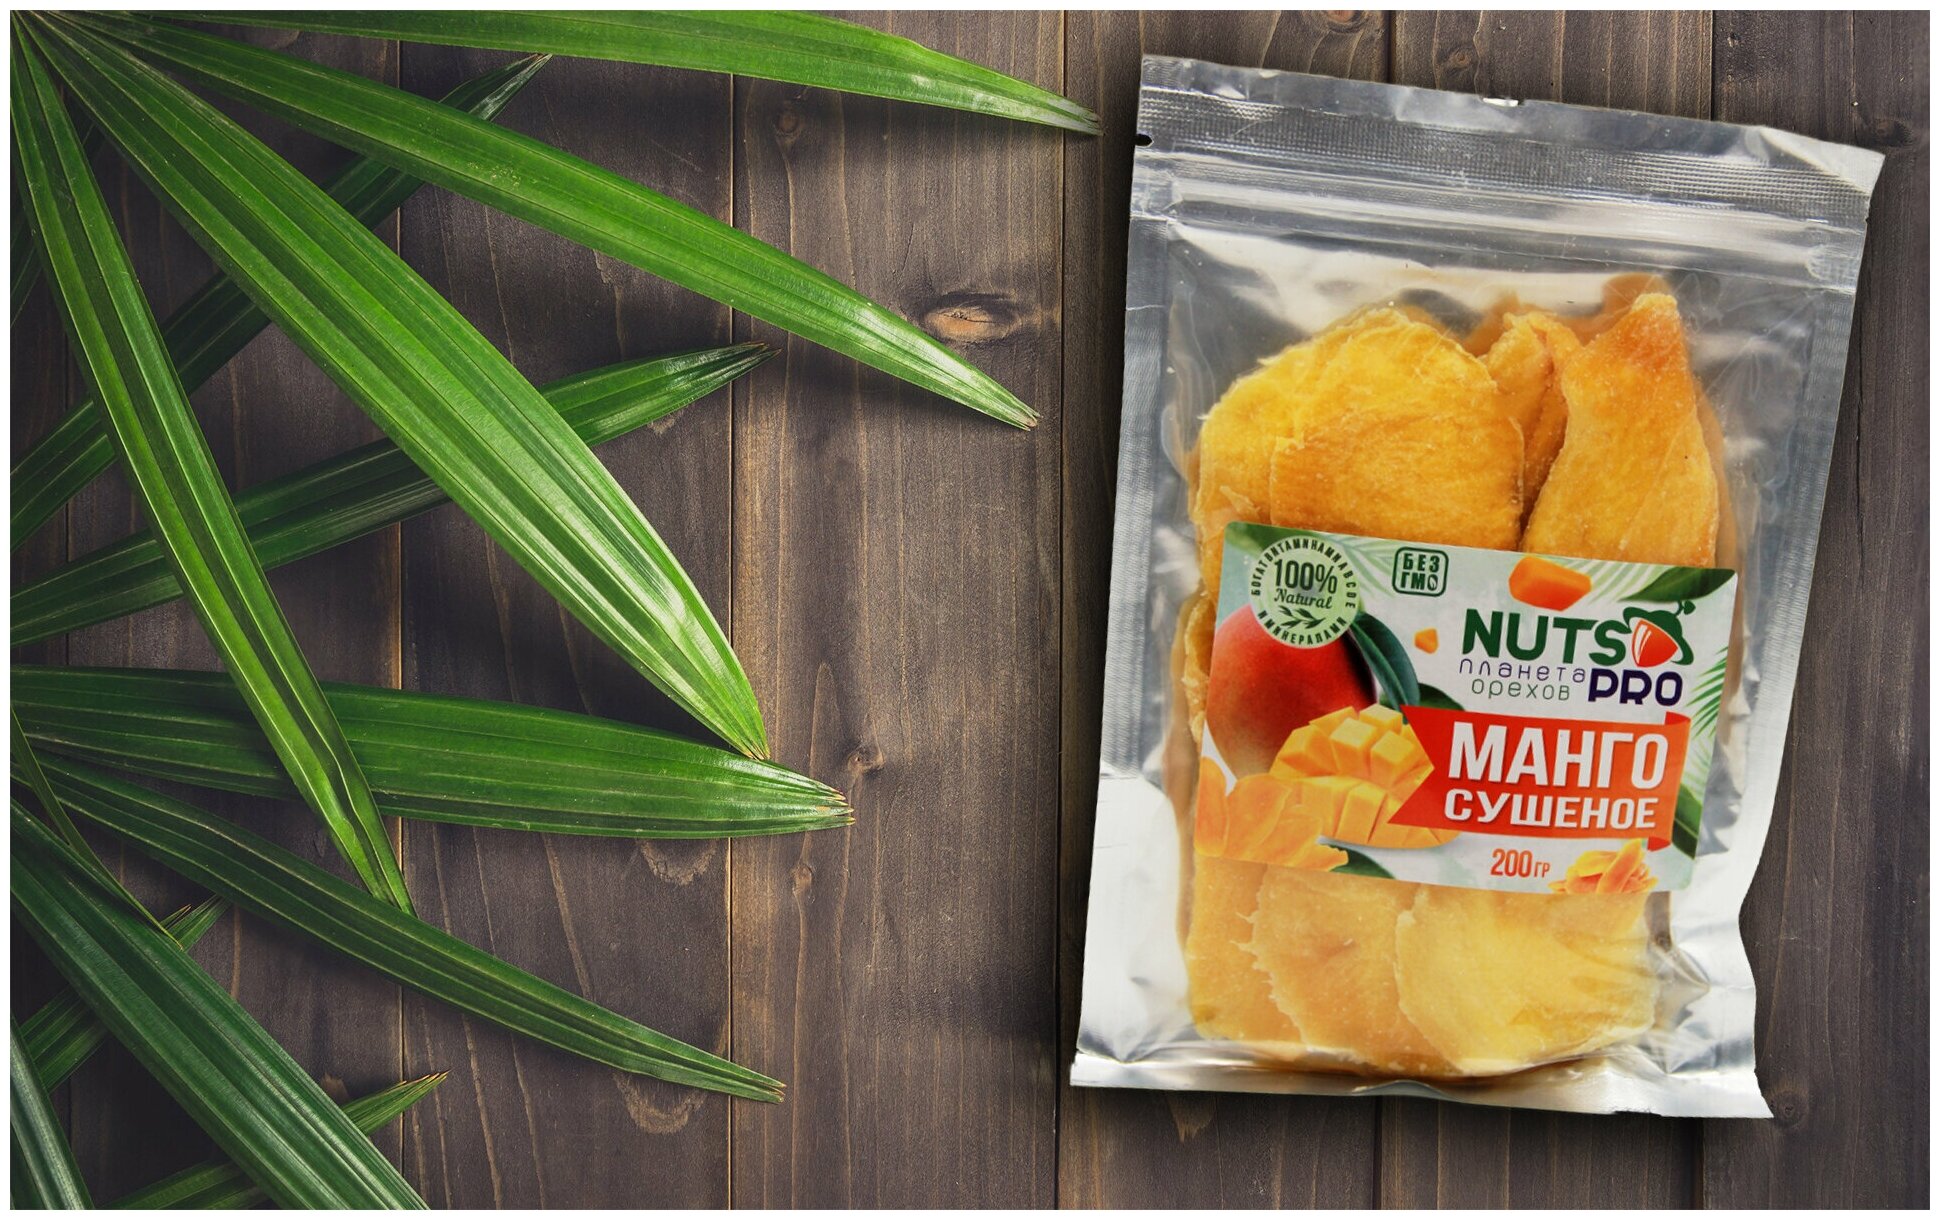 Манго сушеное натуральное "NUTS PRO" (зип) 200 гр (1шт по 200 гр) - фотография № 3